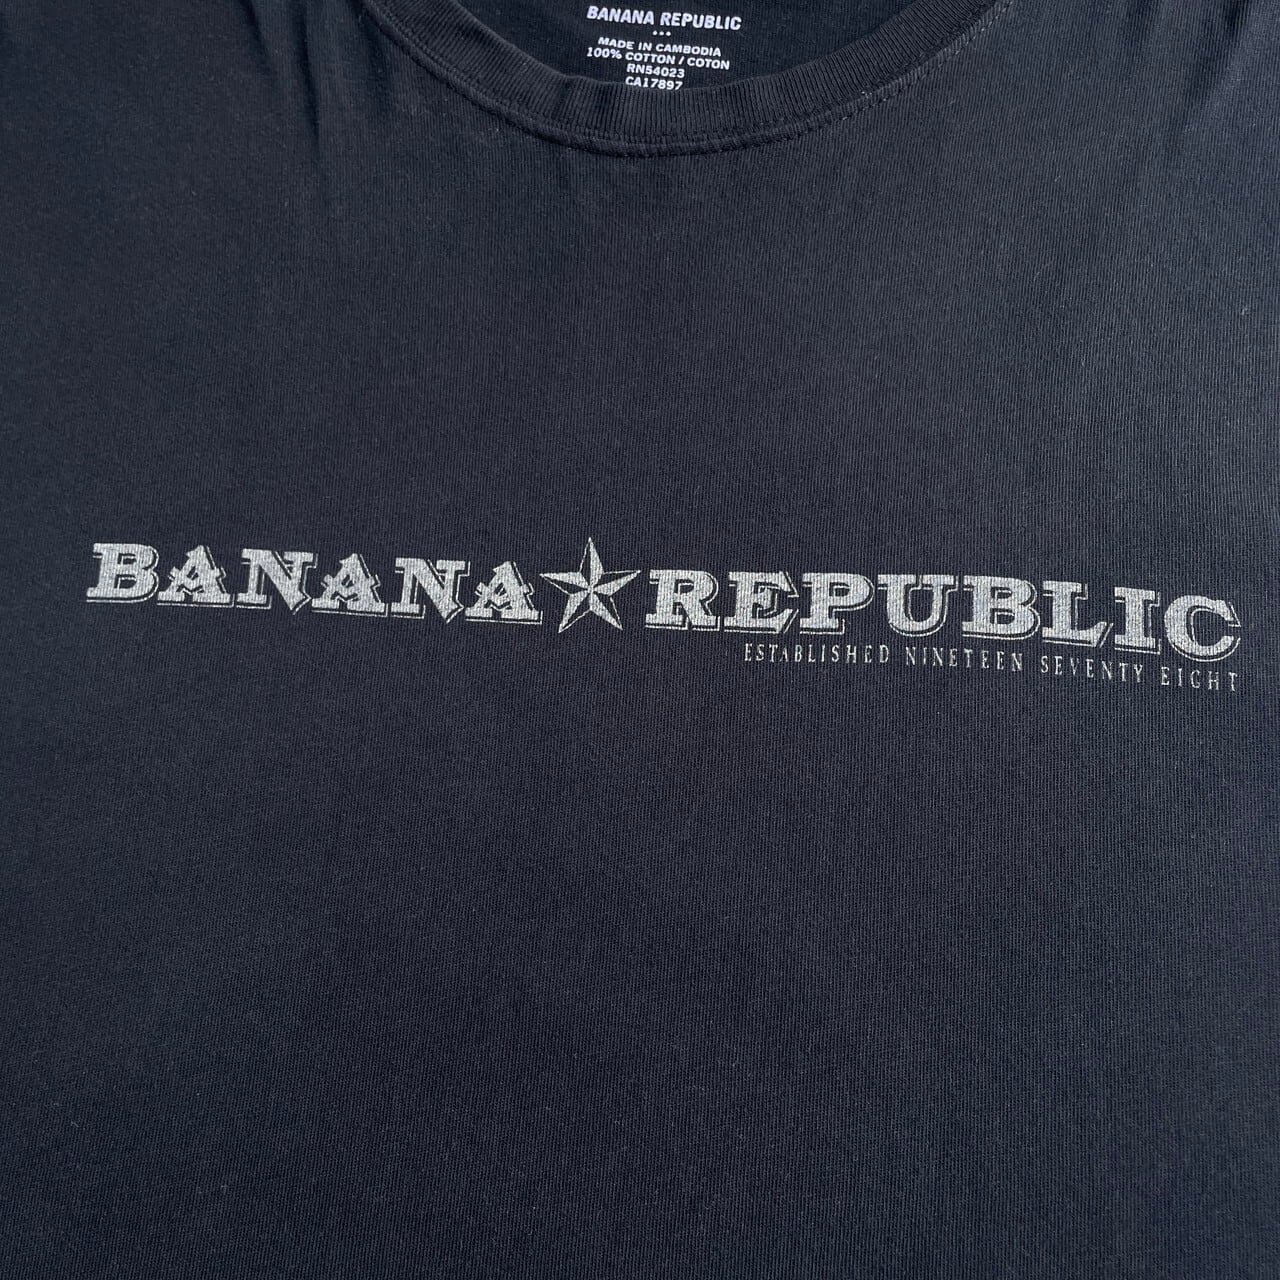 BANANA REPUBLIC バナナリパブリック ブランドロゴ プリントT